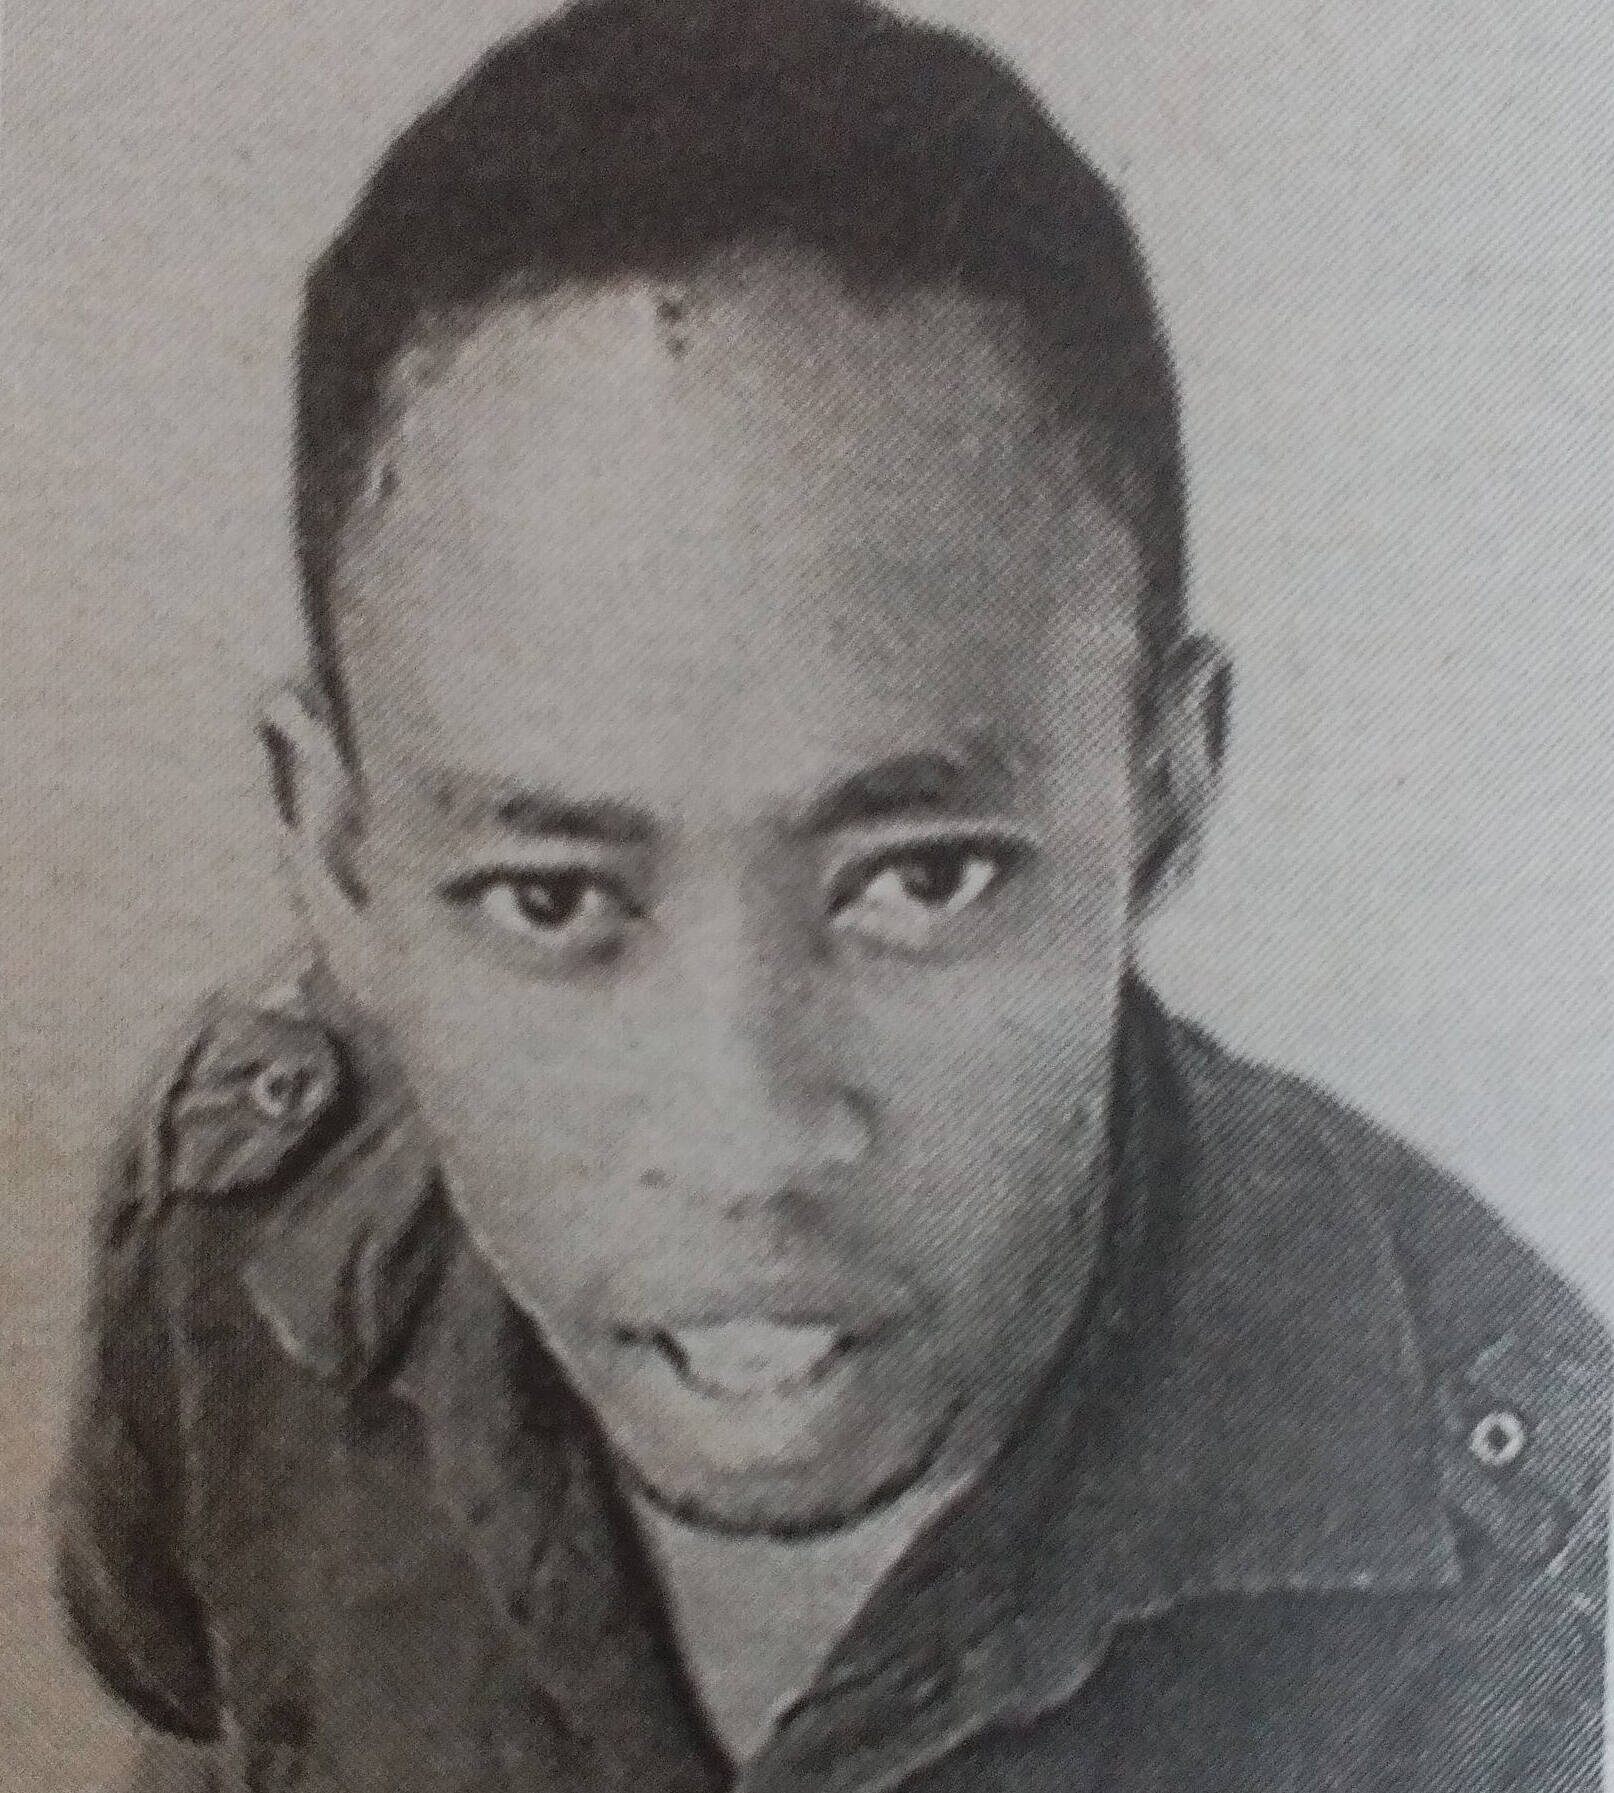 Obituary Image of Jefferson Mutie Titus Born in 1988